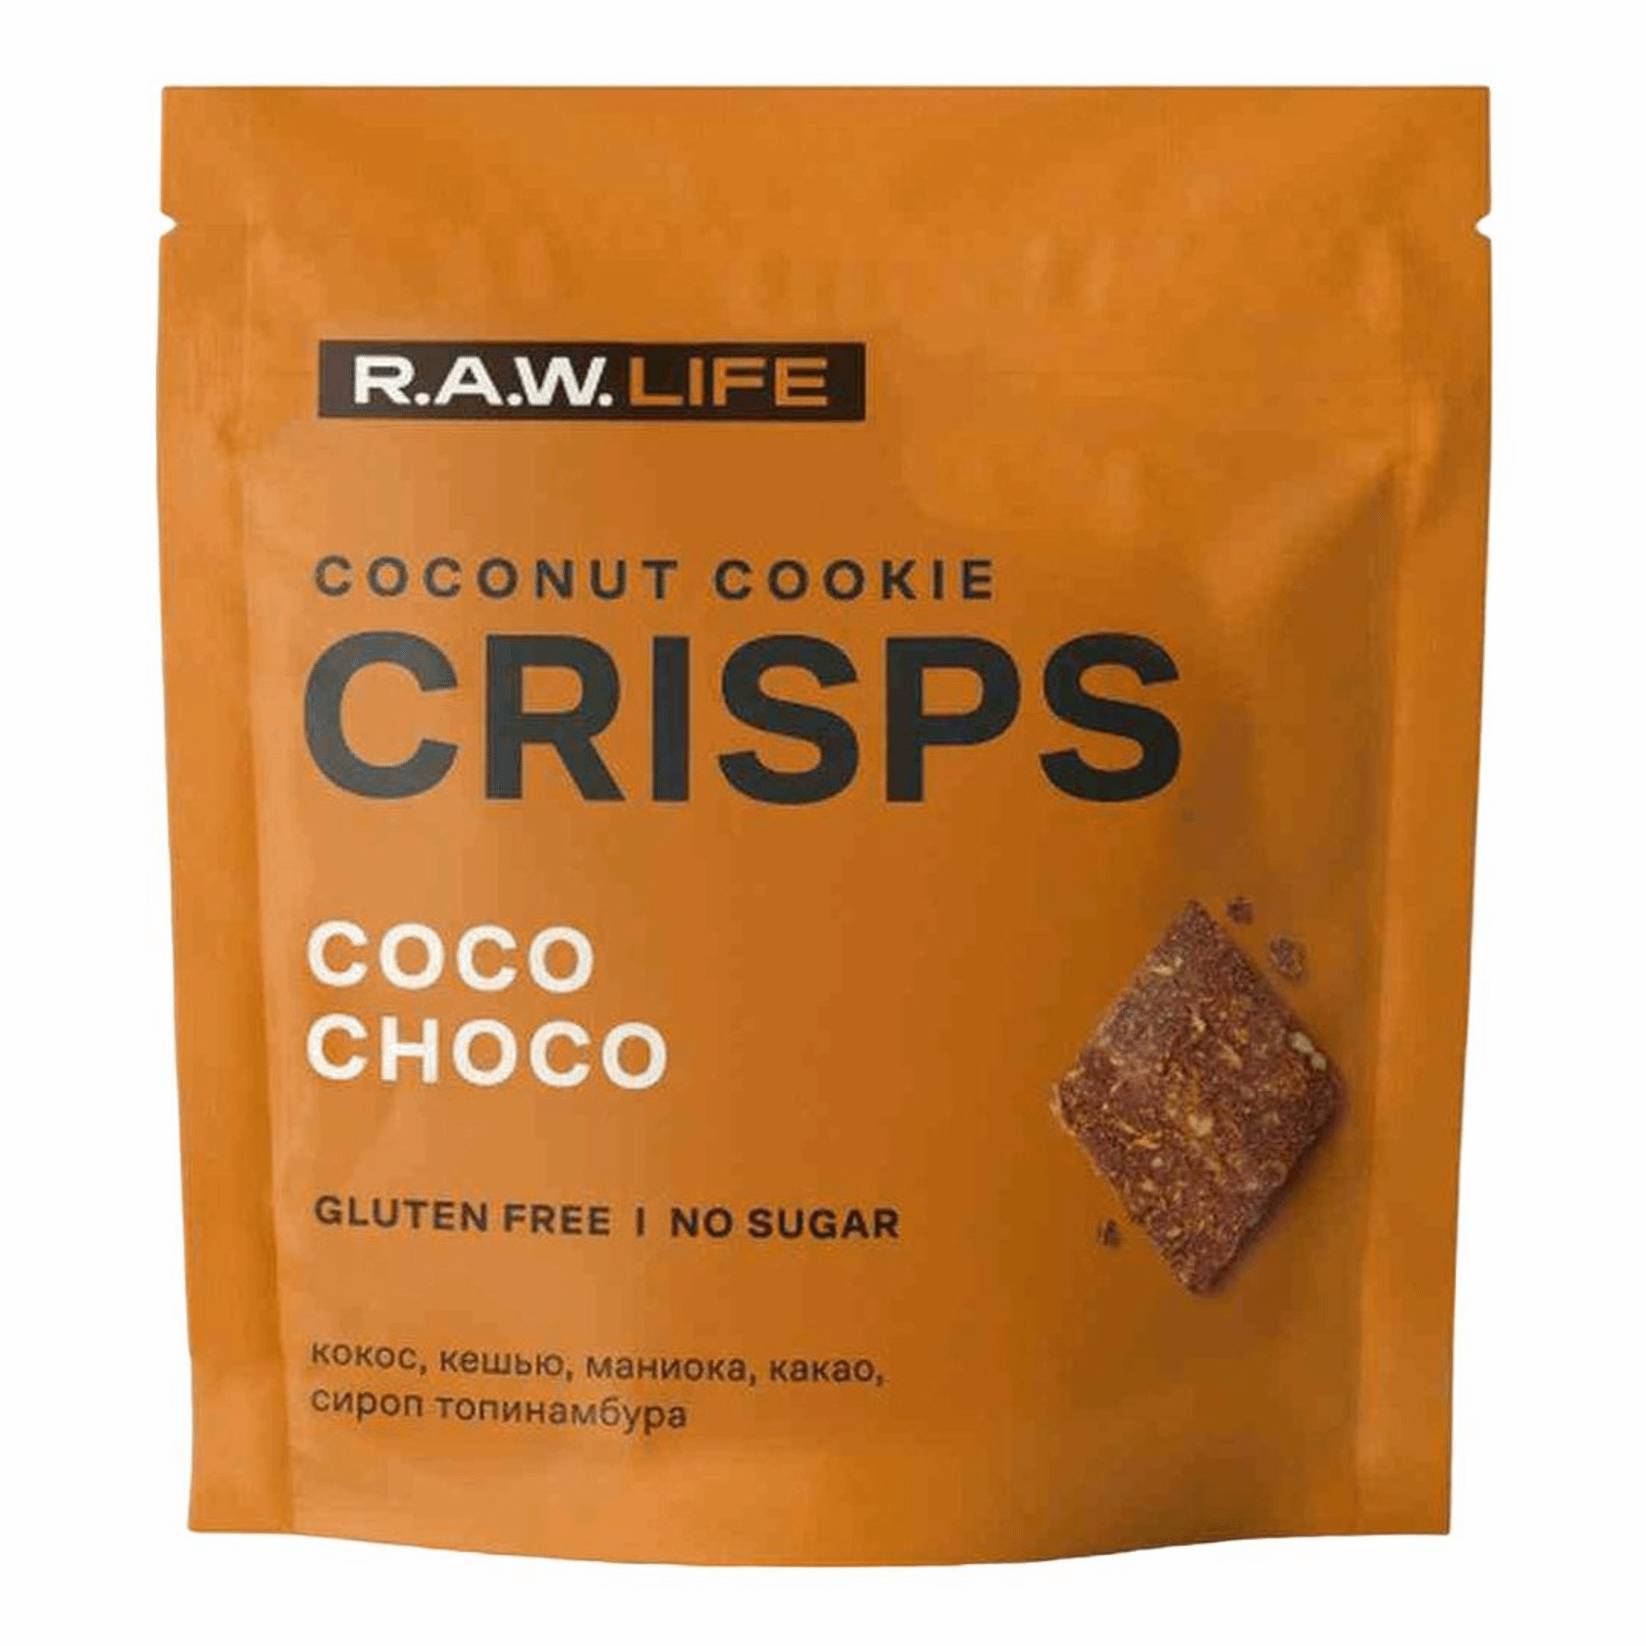 Печенье R.A.W. LIFE Crisps кокос-шоколад, 35 г печенье акконд трио какао шоколад 460 г